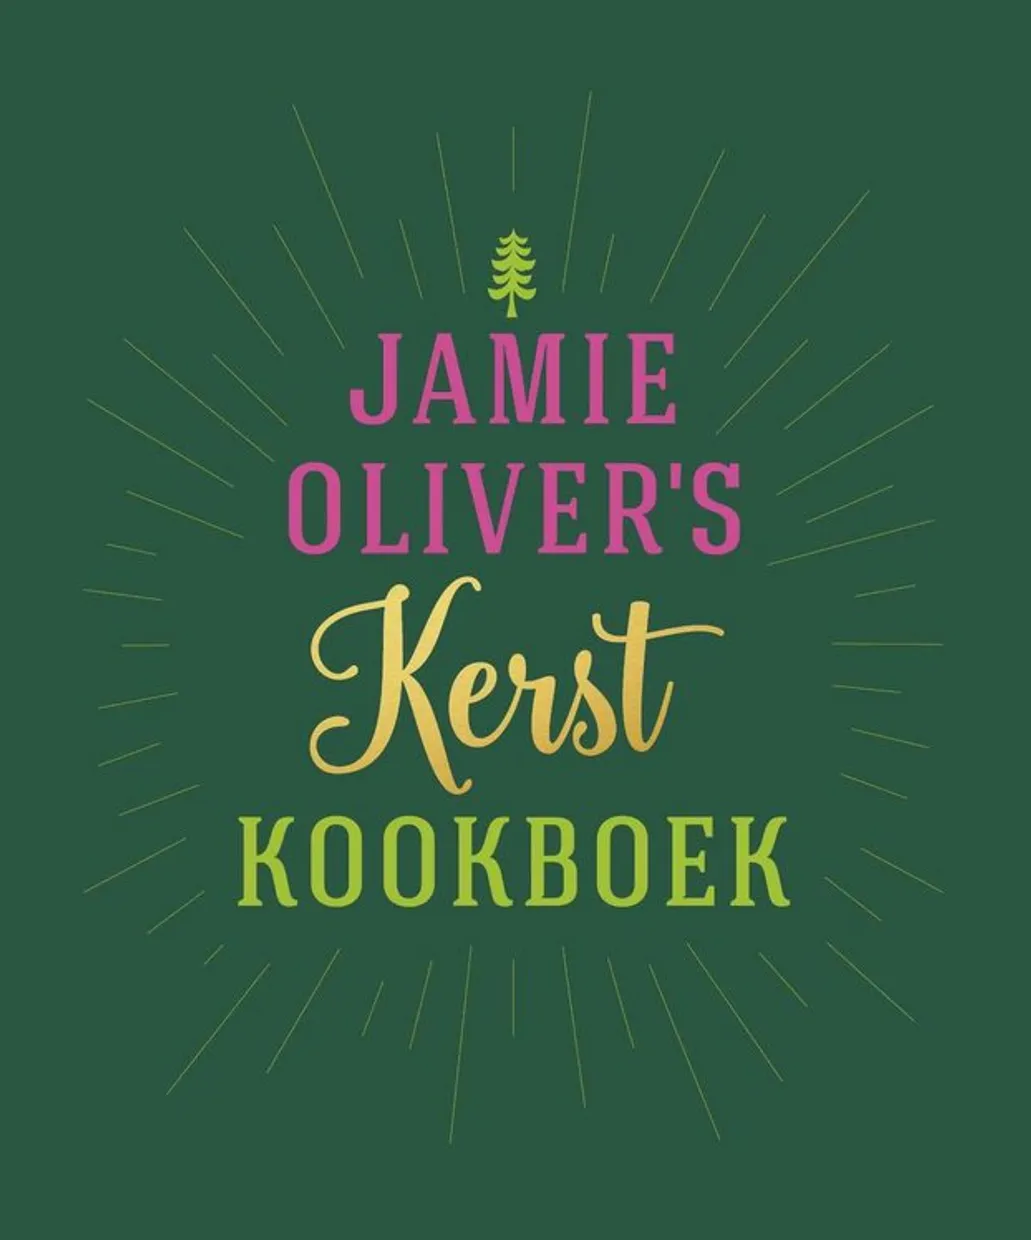 Jamie Oliver's Kerst kookboek